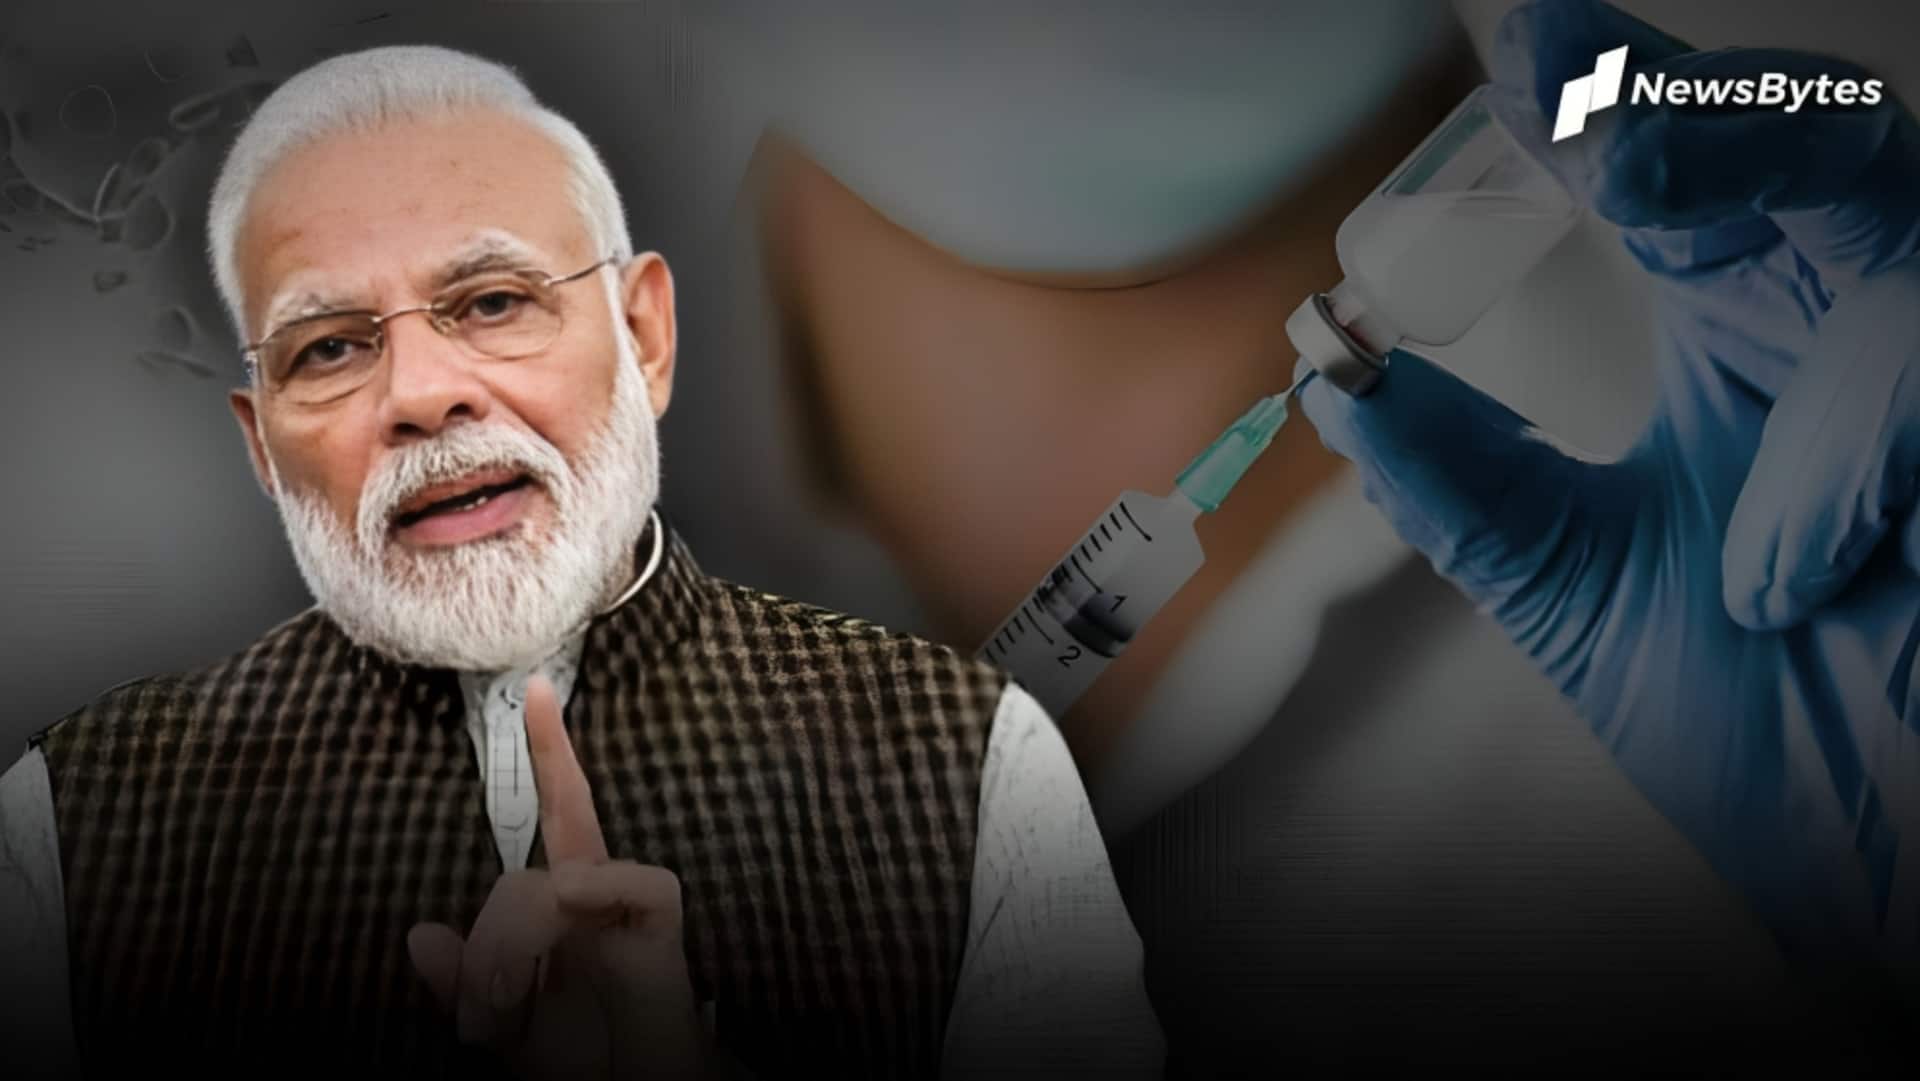 कोरोना वैक्सीन प्रमाणपत्र से हटाई गई प्रधानमंत्री नरेंद्र मोदी की तस्वीर, स्वास्थ्य मंत्रालय ने बताया कारण